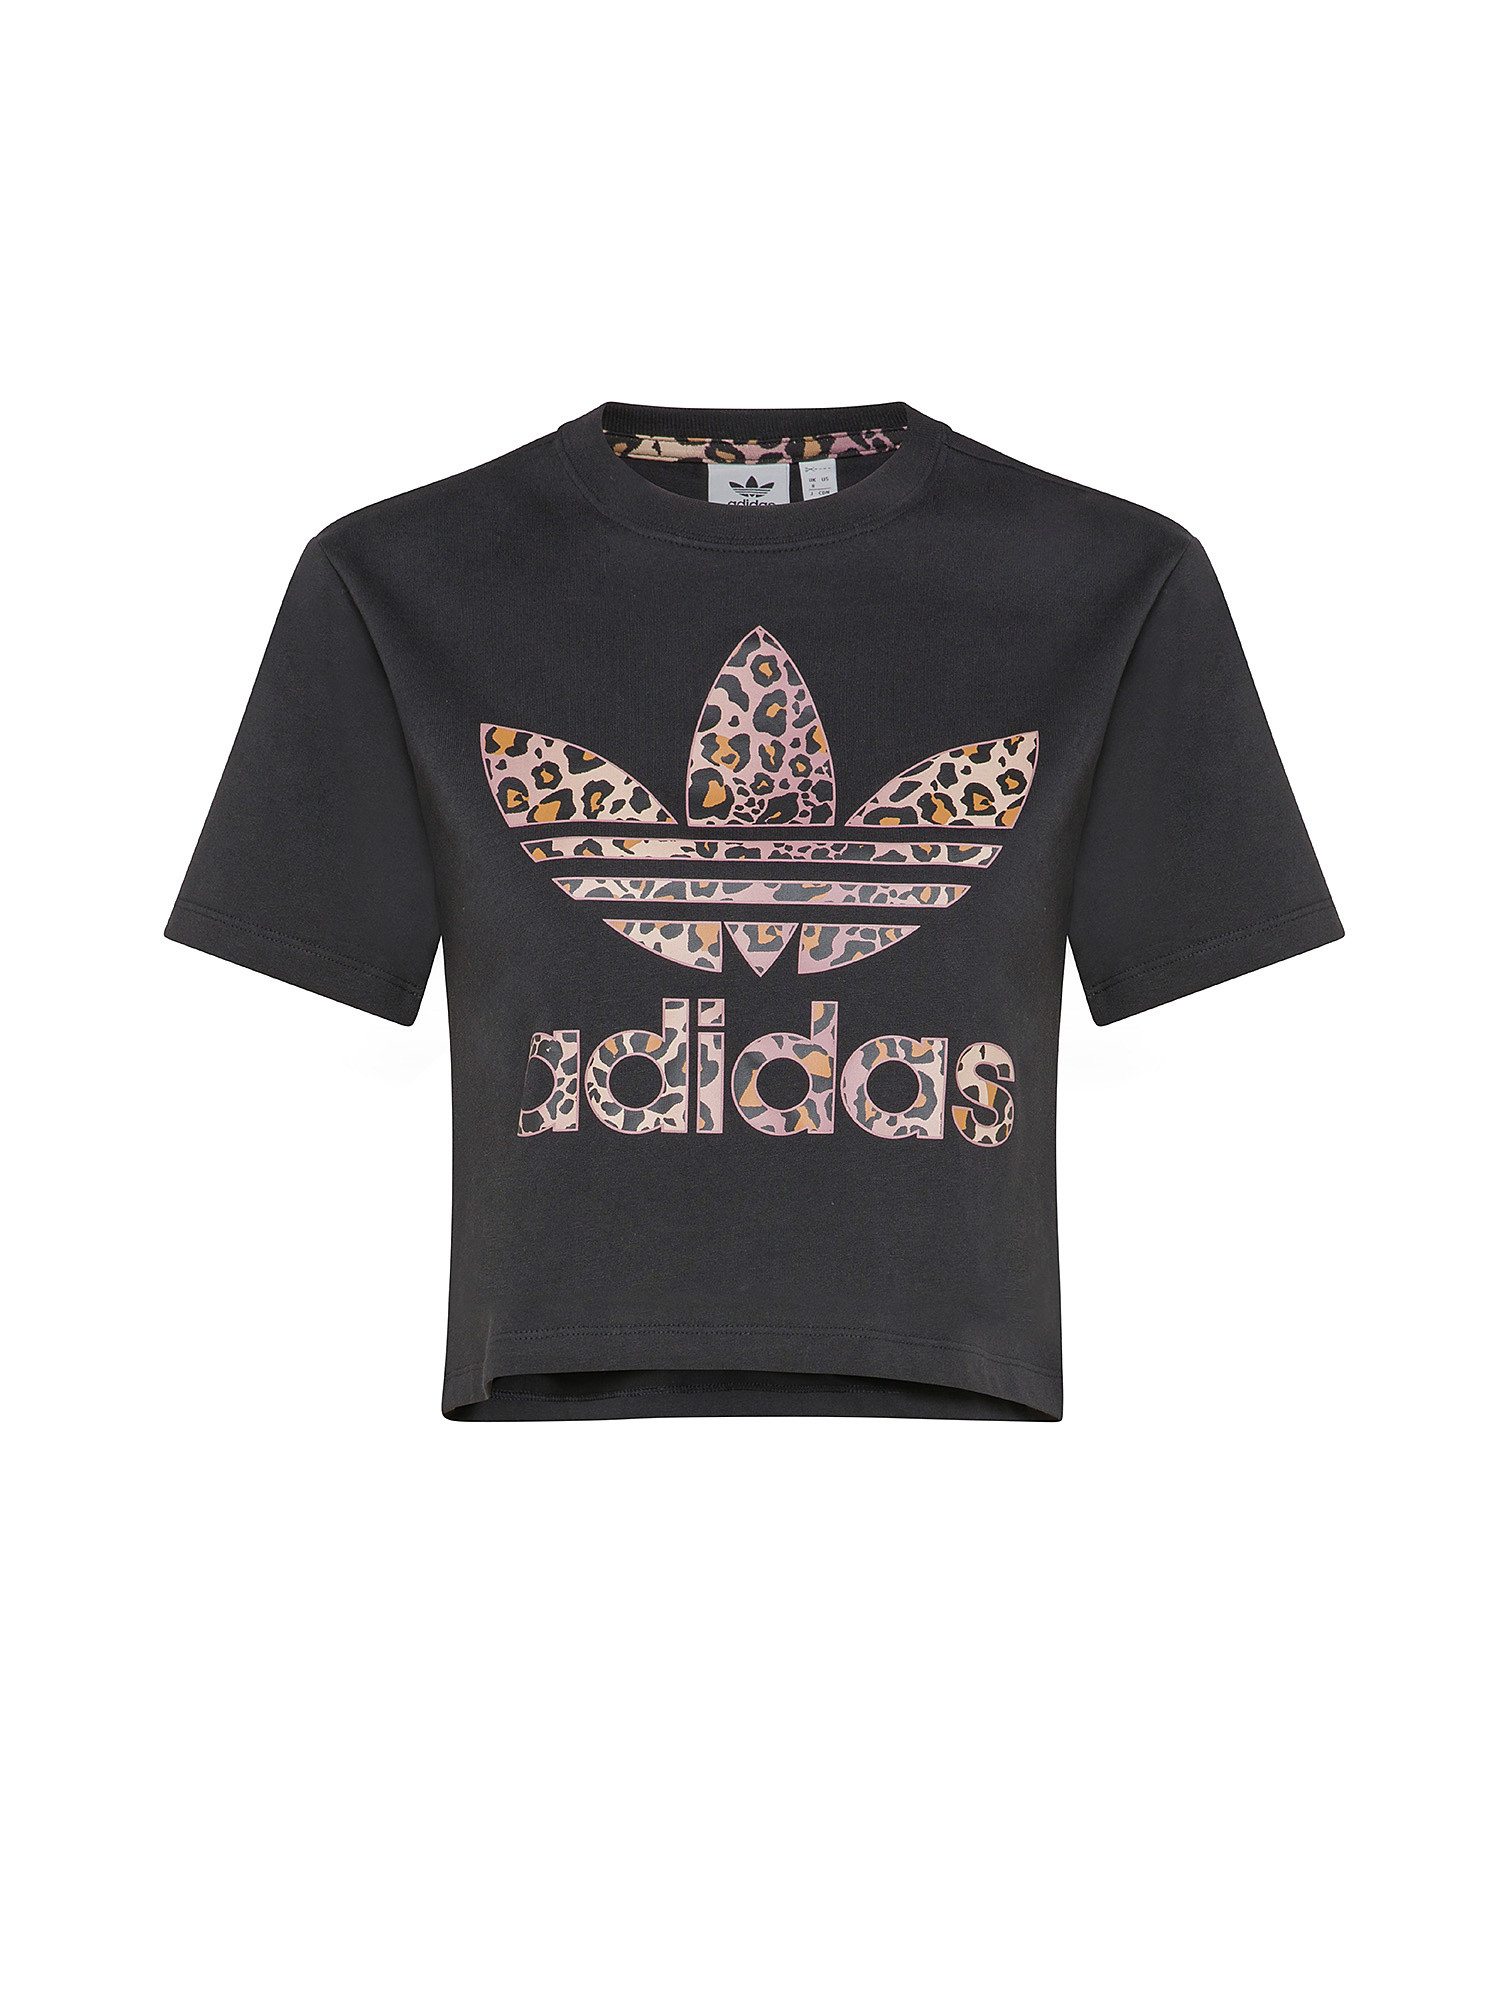 Adidas - T-shirt with logo, Black, large image number 2